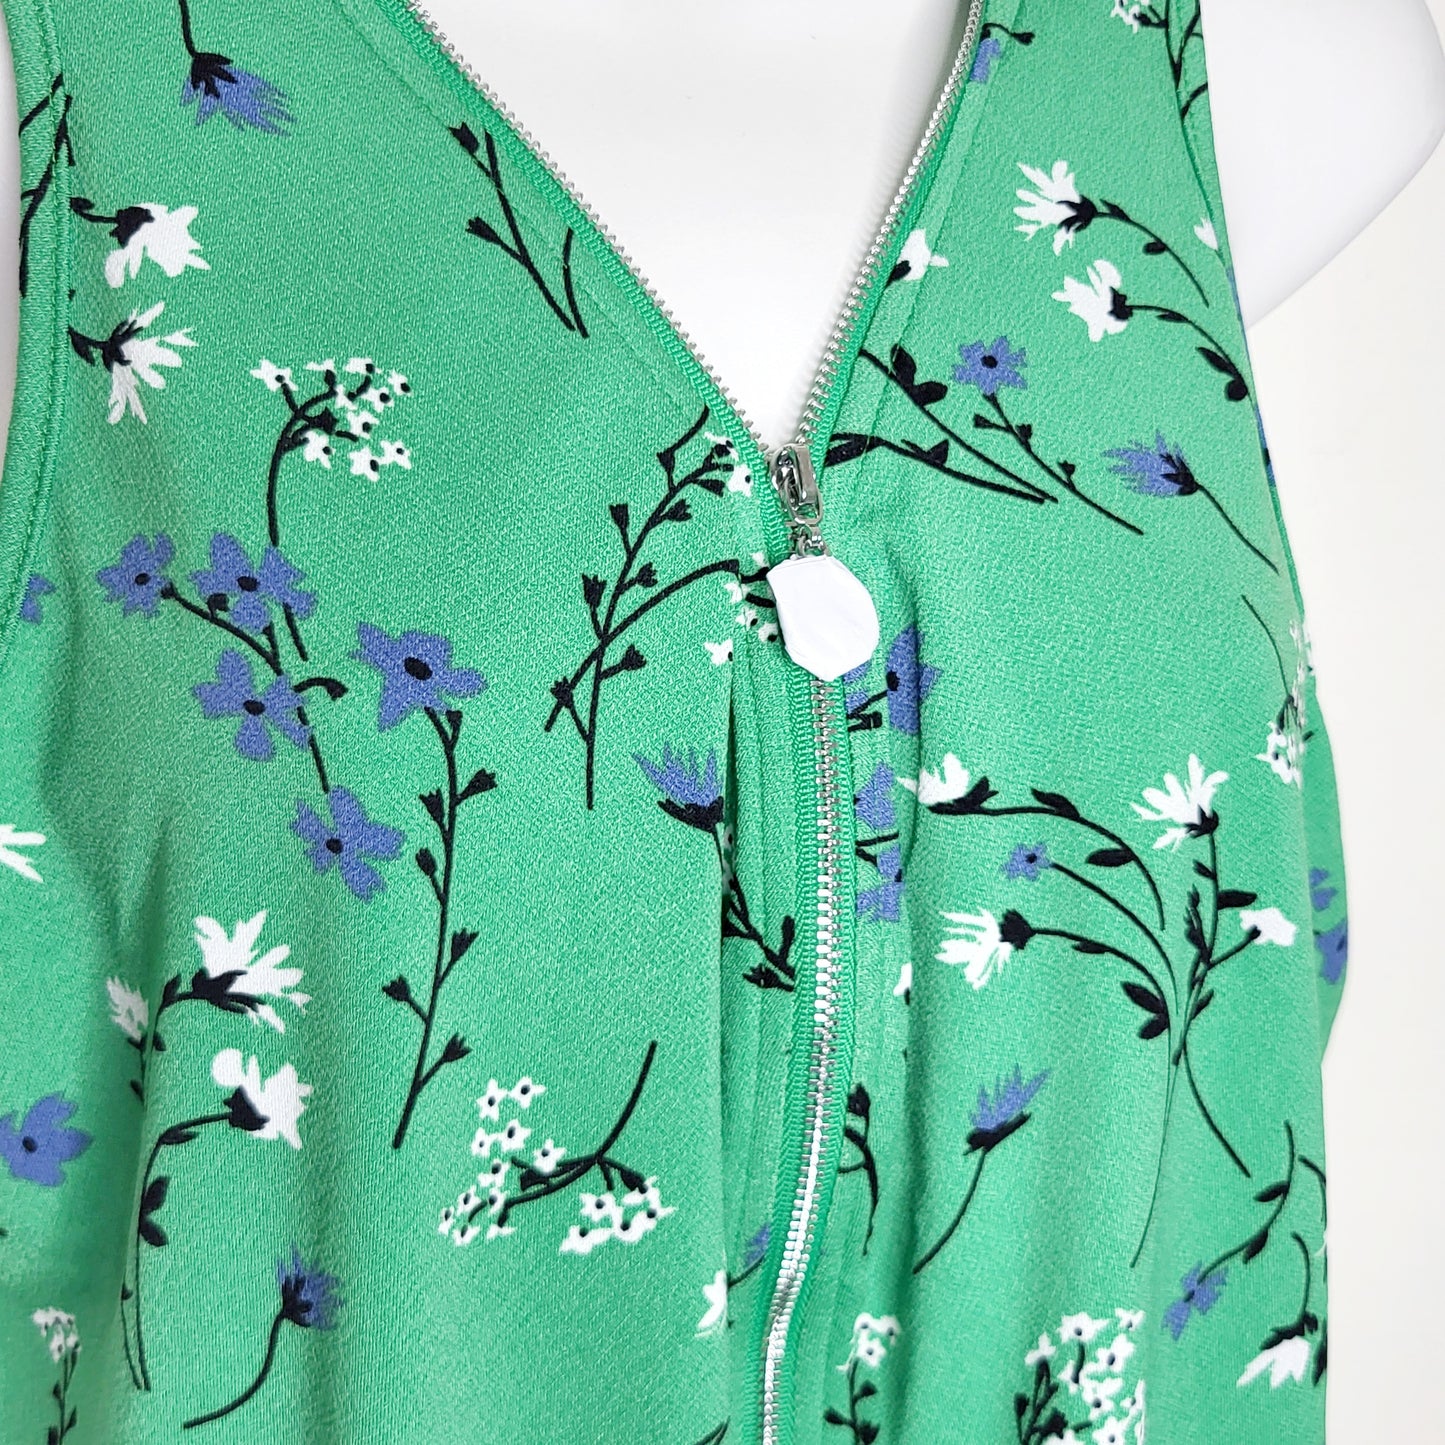 RVOS2 - NEW - Ricki's green floral print sleeveless blouse, size large